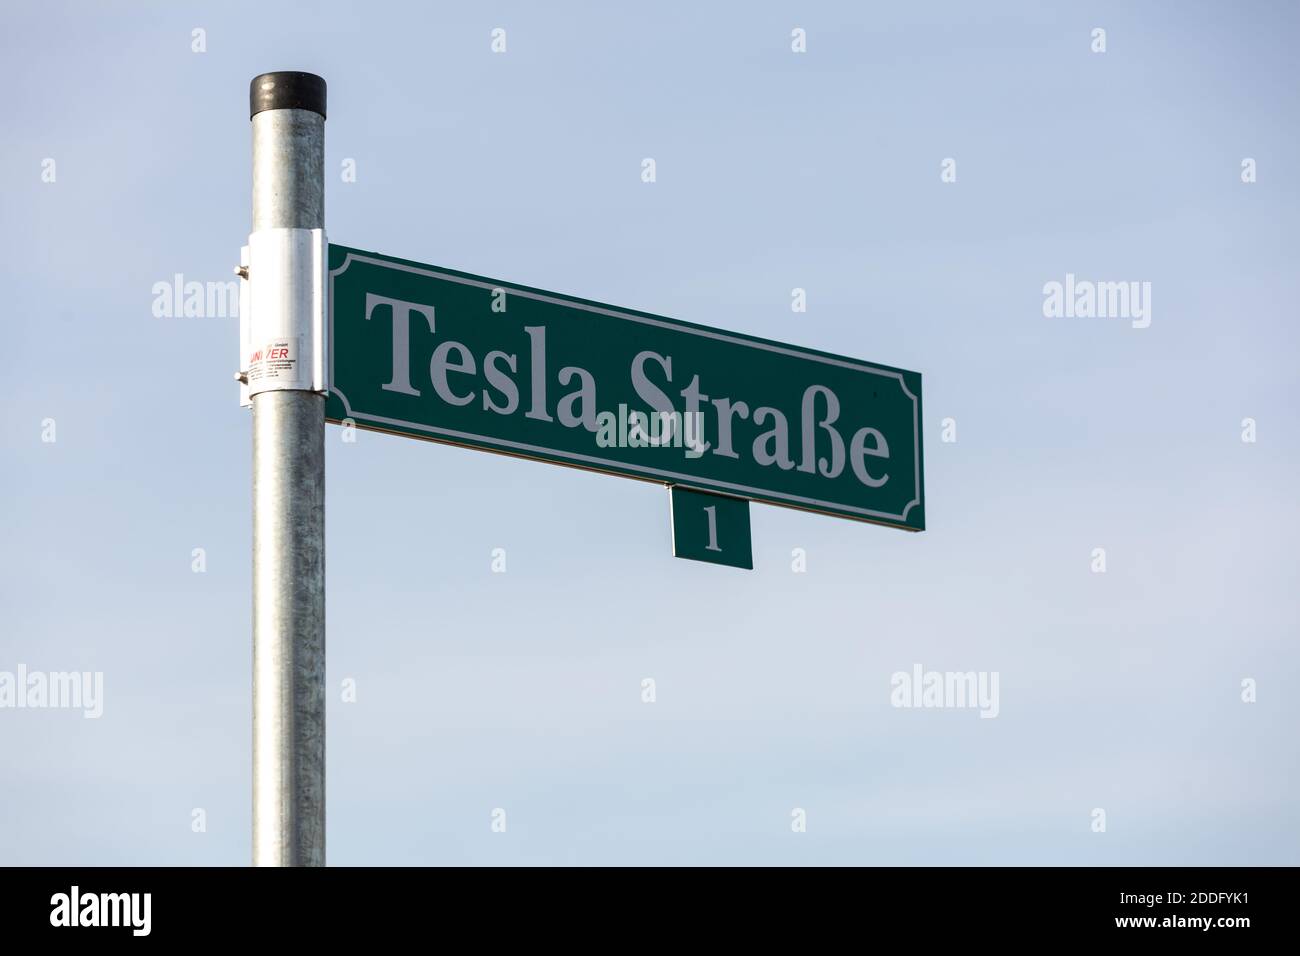 Construction Site of Tesla Gigafactory in Gruenheide Berlin Brandenburg at 24th of November 2020 Stock Photo